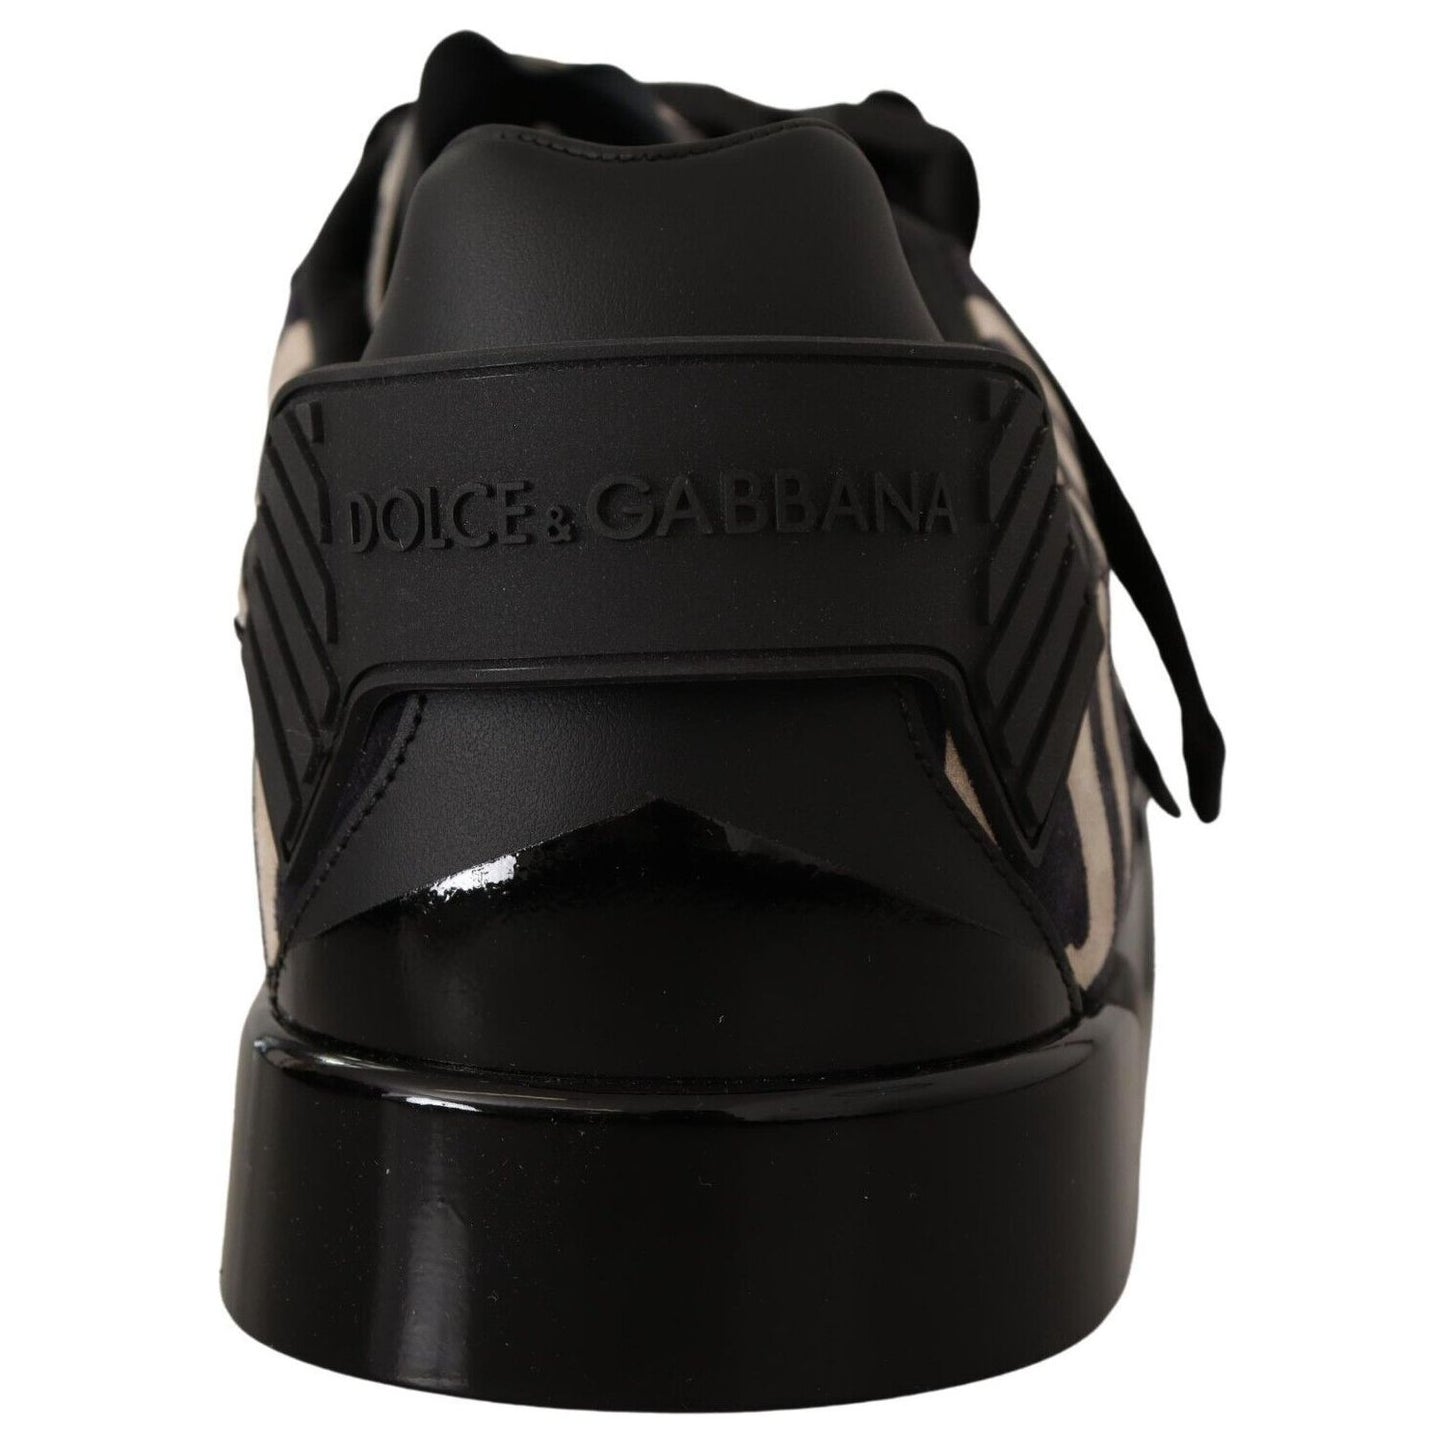 Dolce & Gabbana Zebra Suede Low Top Fashion Sneakers black-white-zebra-suede-rubber-sneakers-shoes-2 MAN SNEAKERS s-l1600-4-35-7c86e800-ff9.jpg